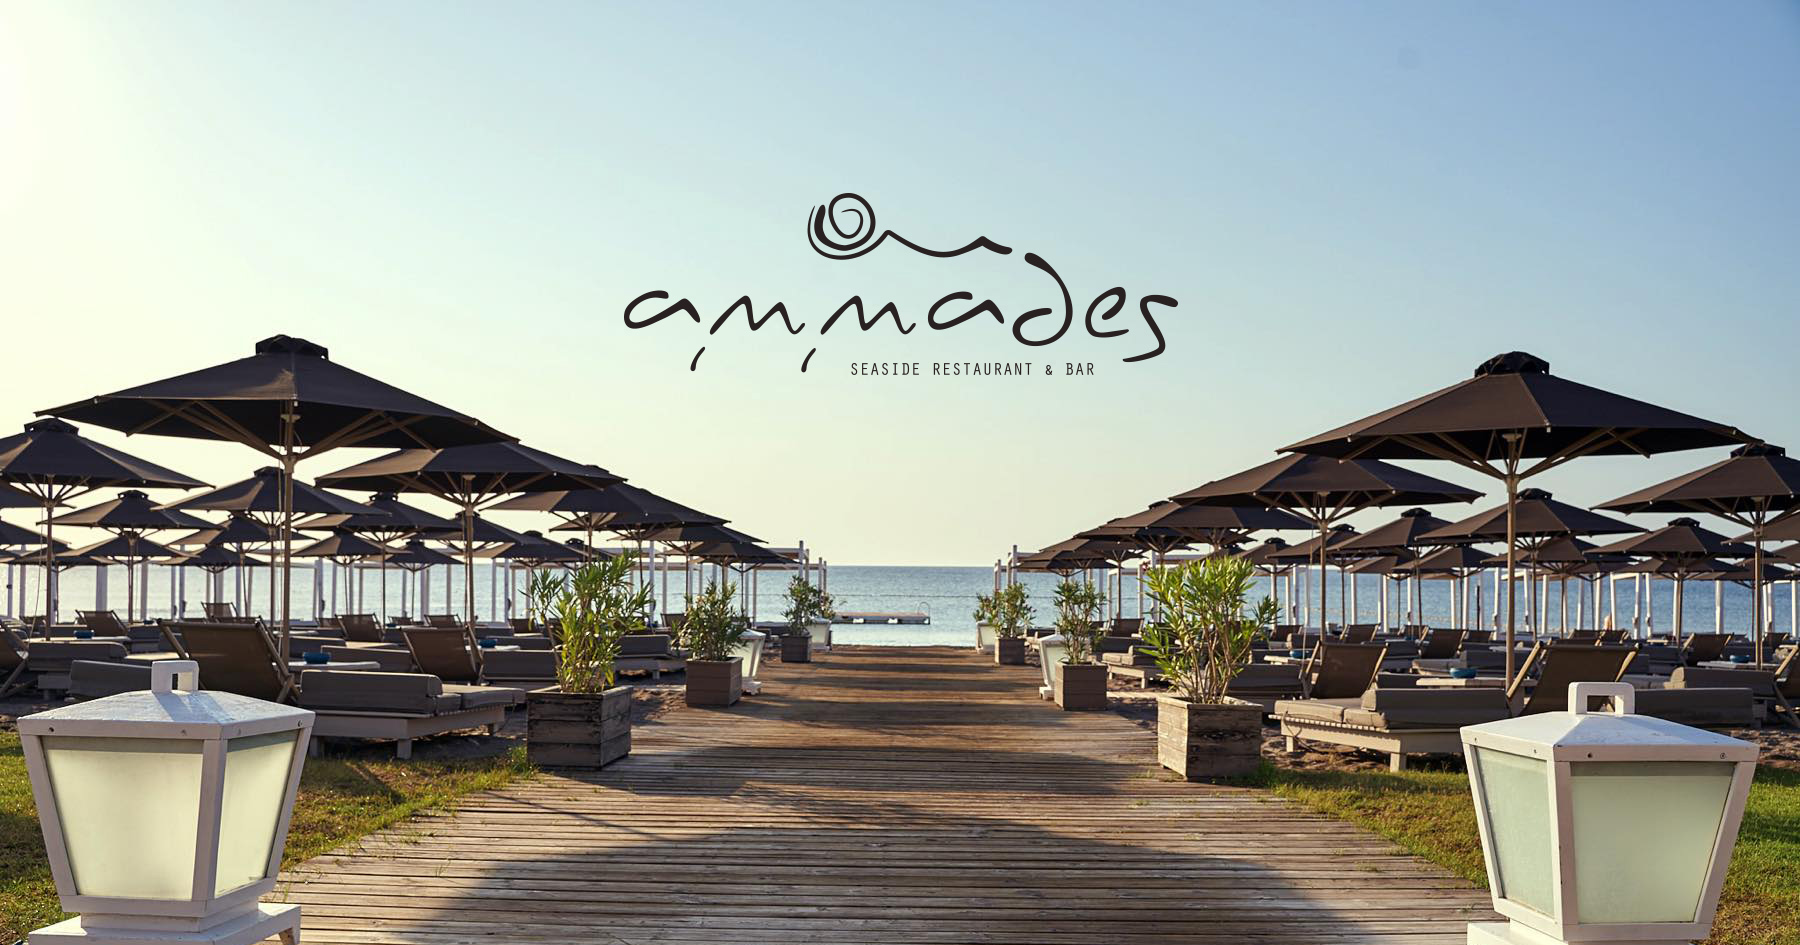 (c) Ammades.gr